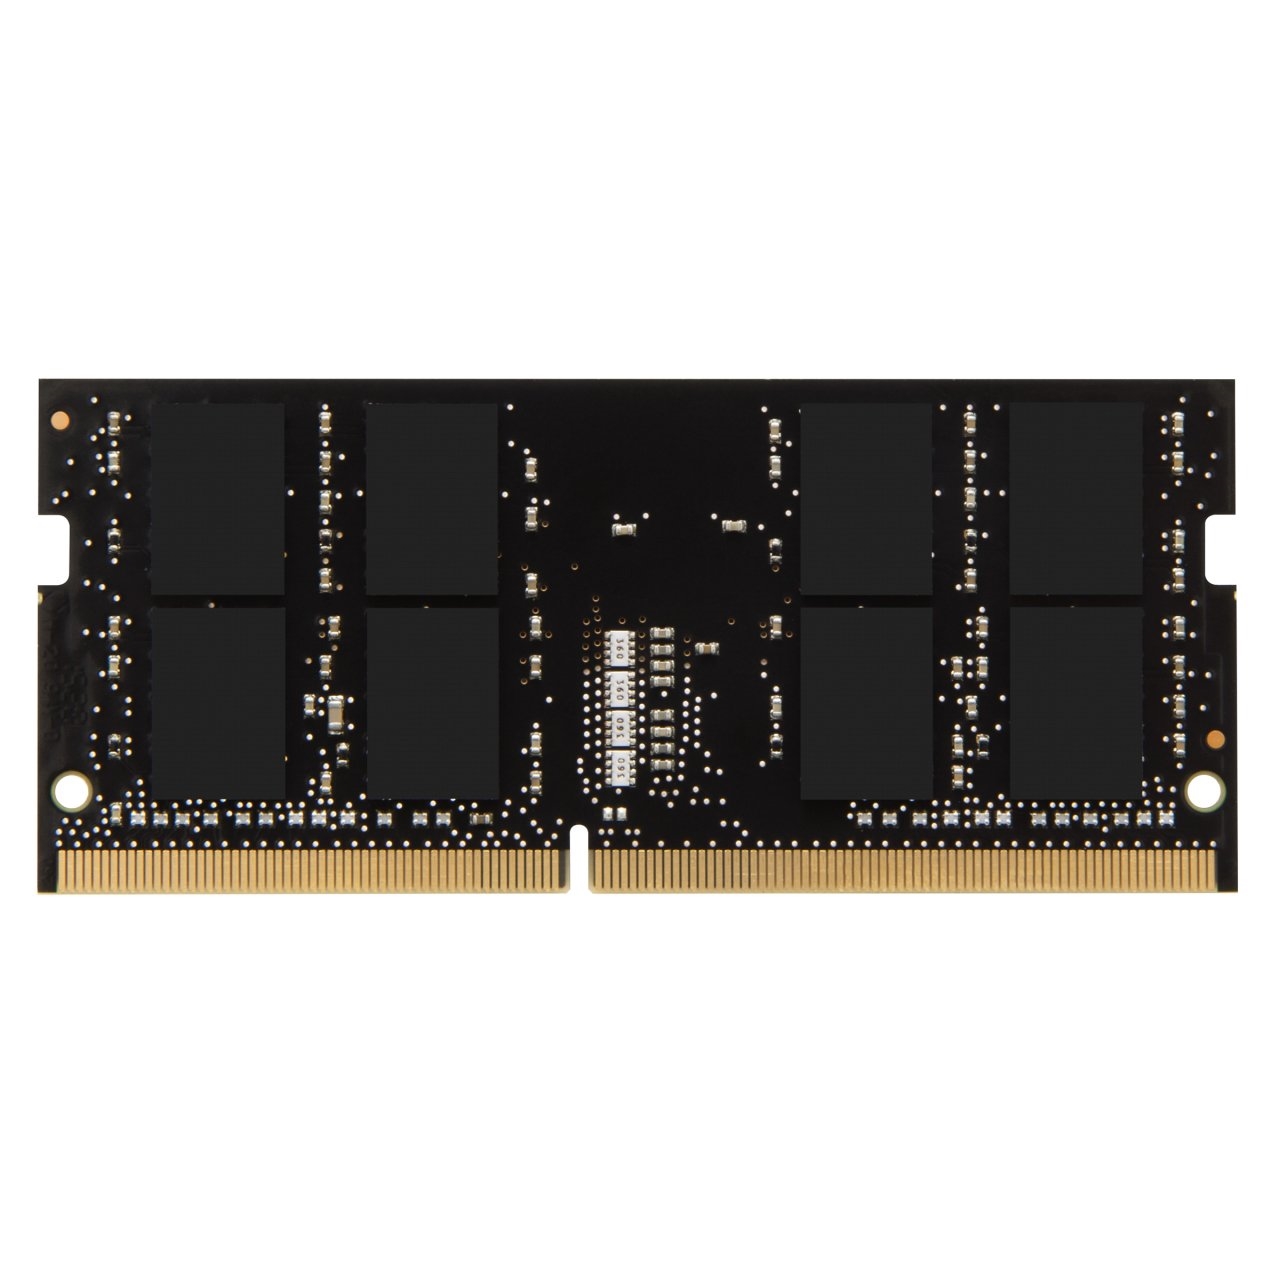 KINGSTON HYPERX 16GB 2400MHz DDR4 HyperX D4 SODIMM HX424S14IB/16